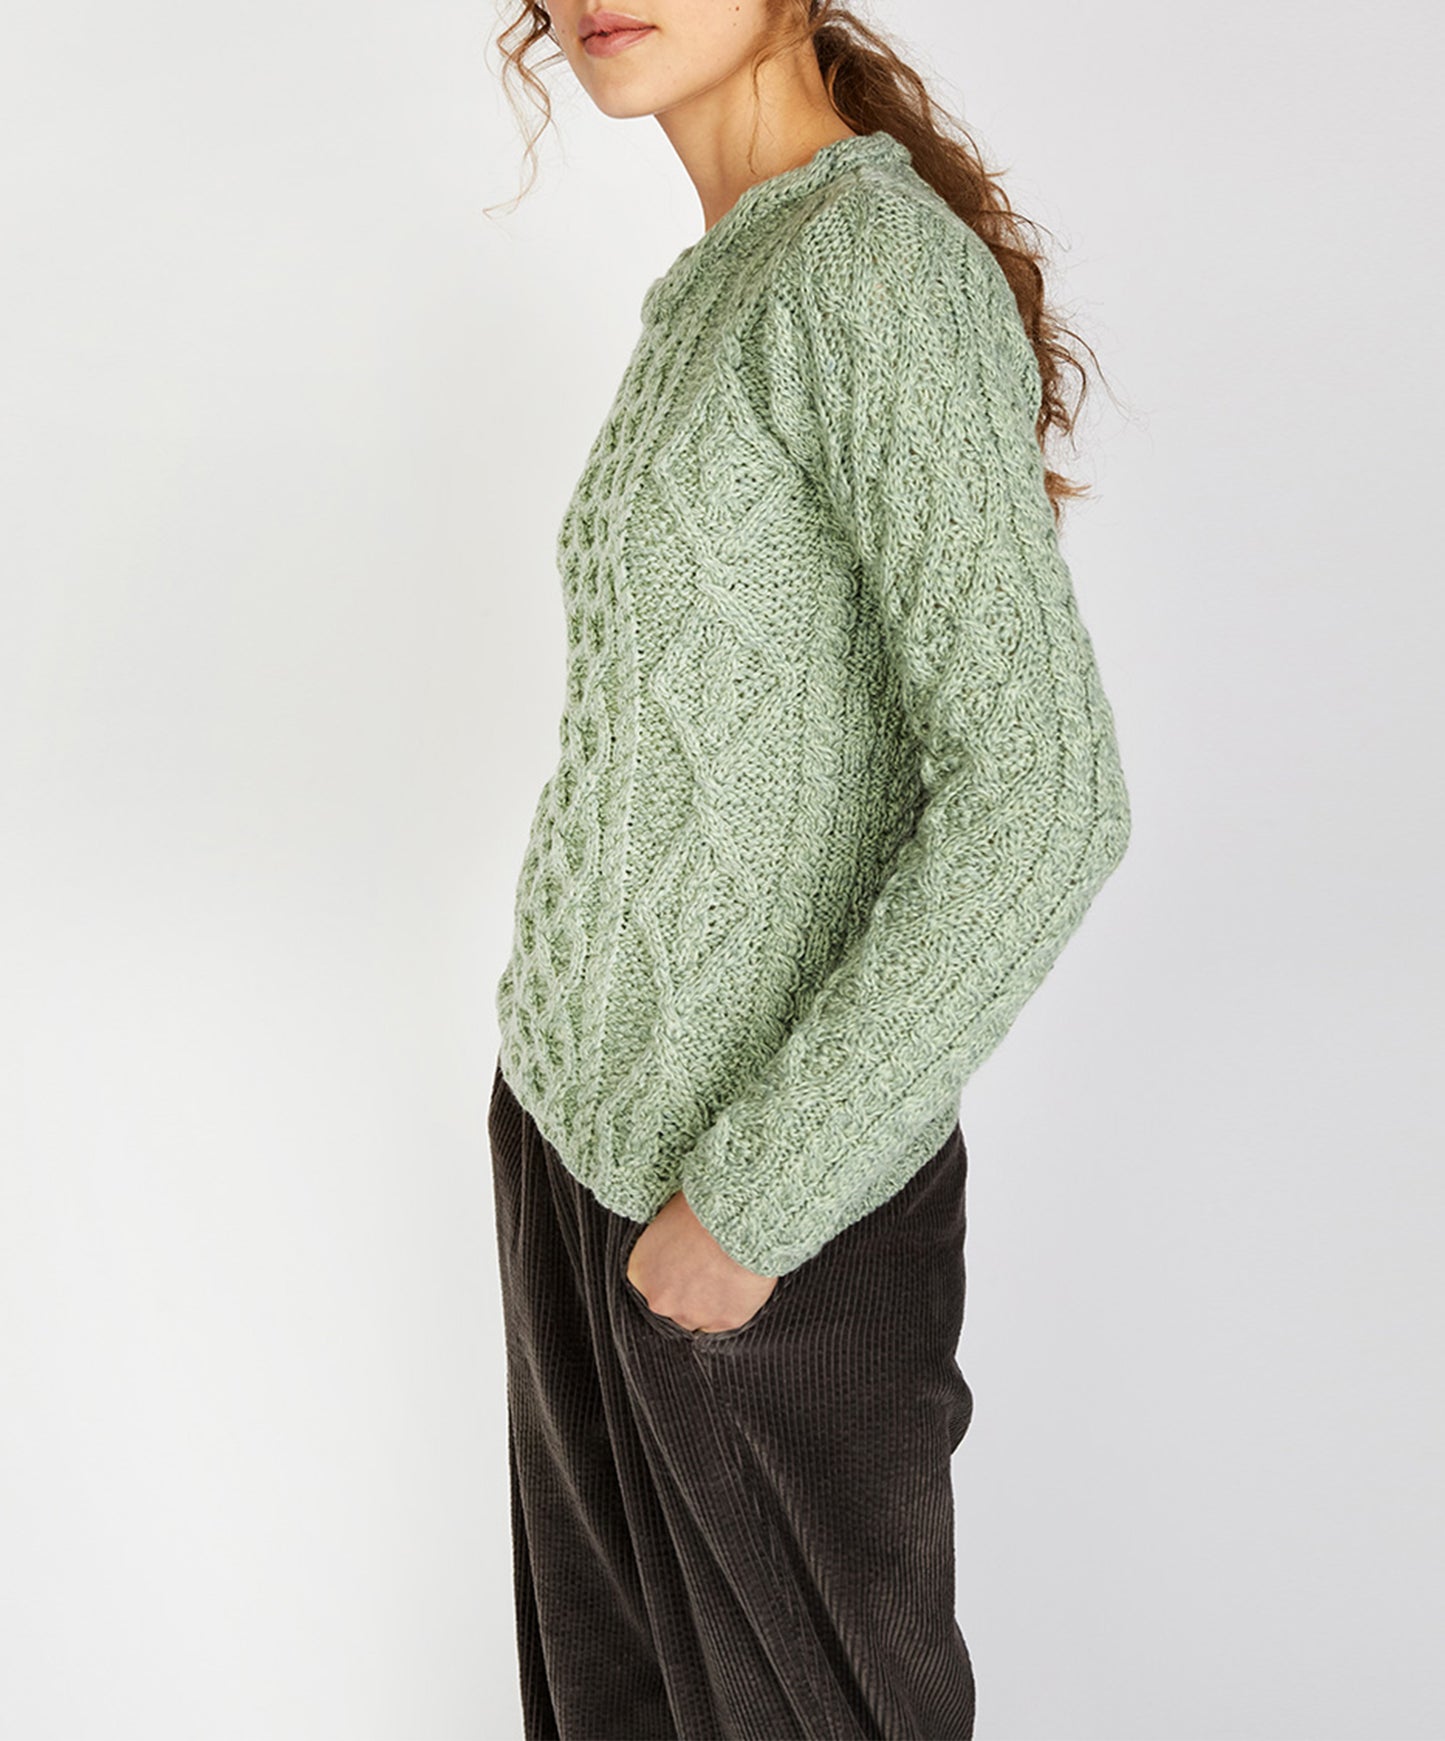 IrelandsEye Knitwear Lambay Lattice Cable Aran Sweater Sage Marl